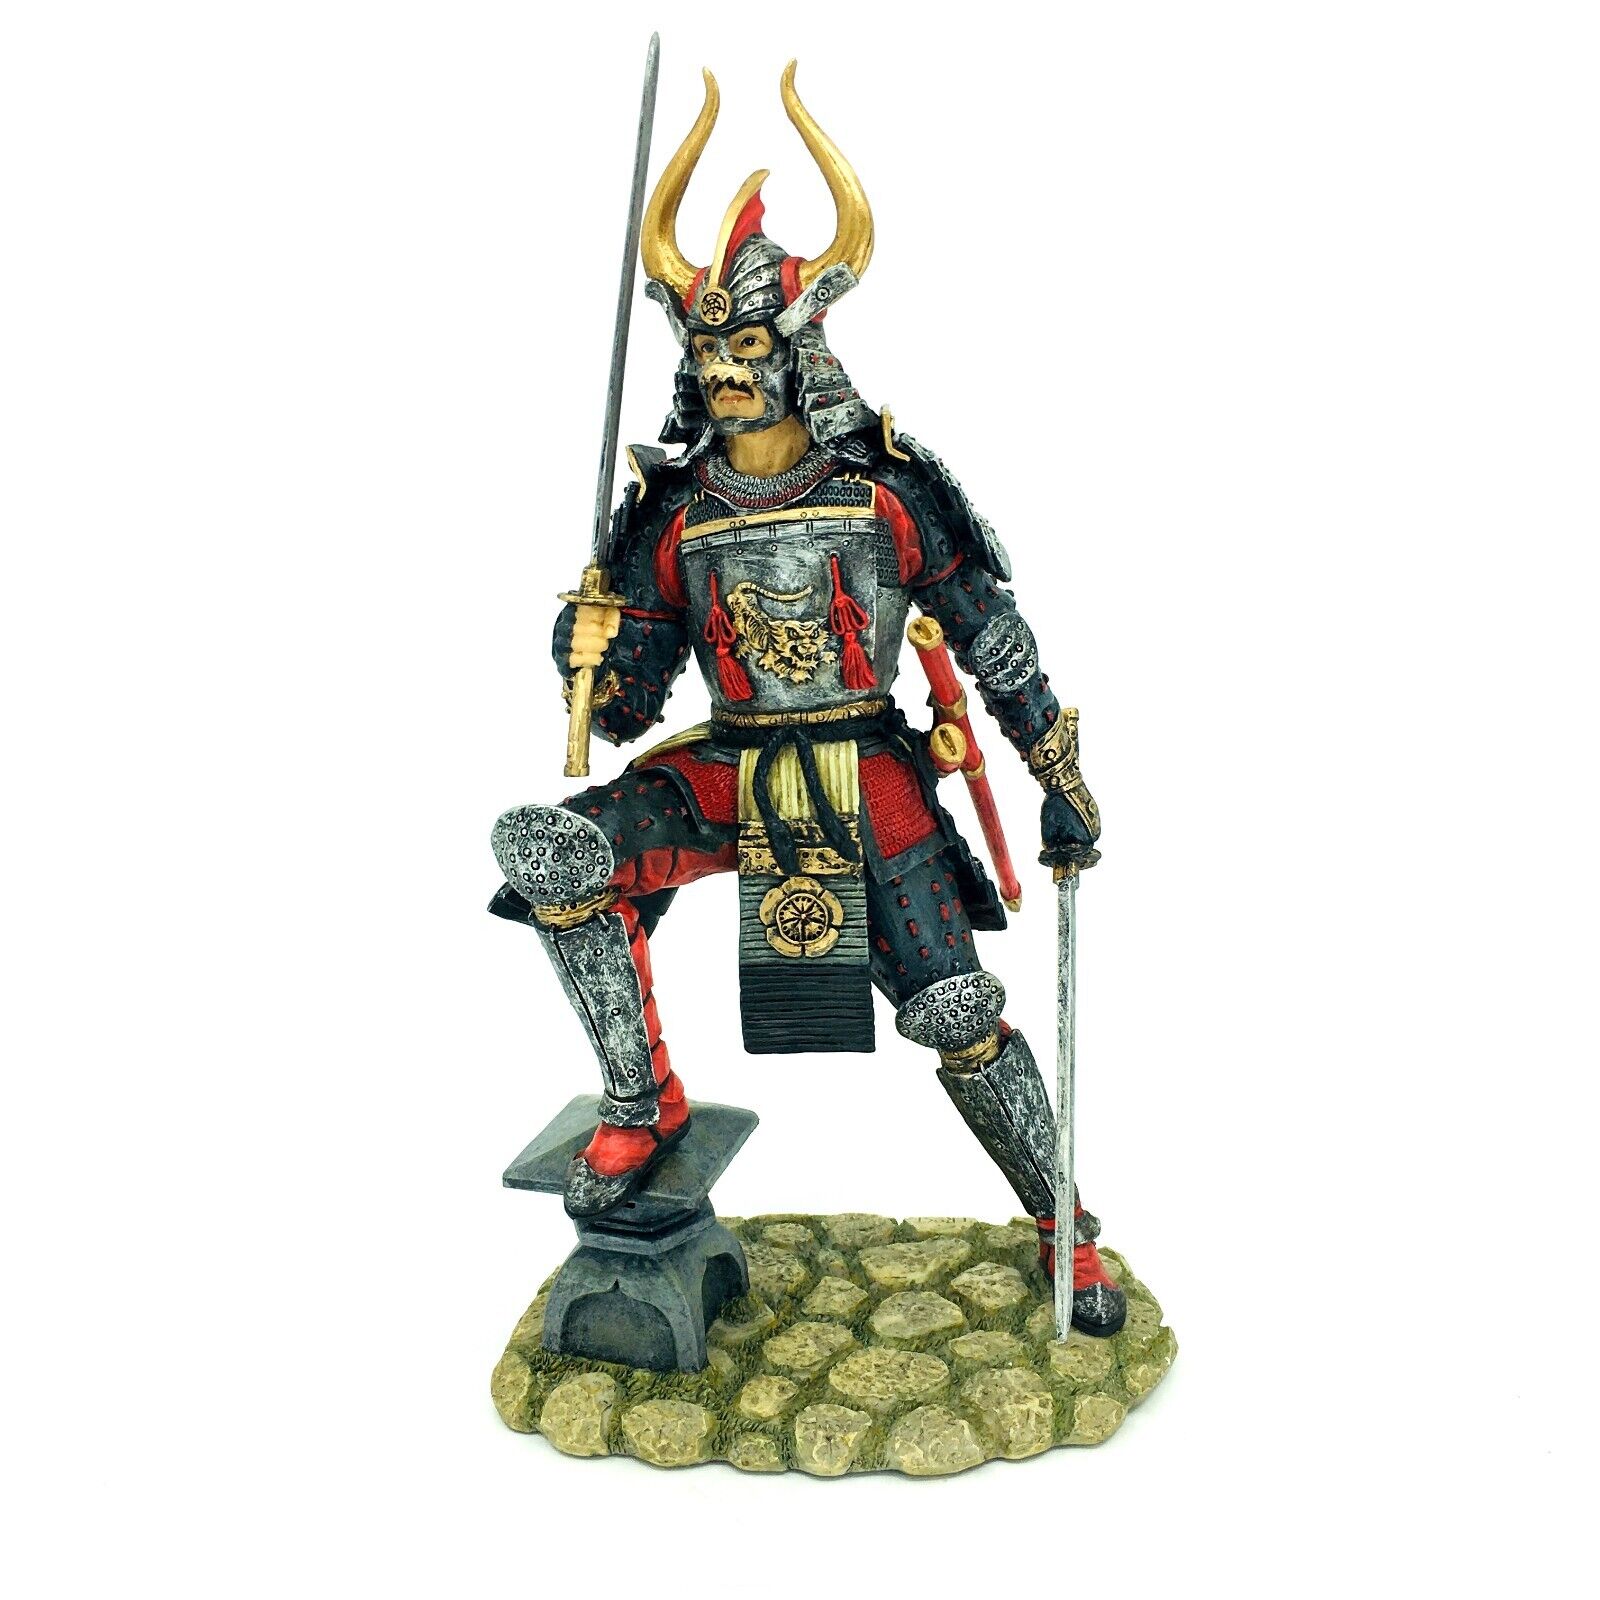 Traditional Japanese Samurai Figurine with Armor and Sword